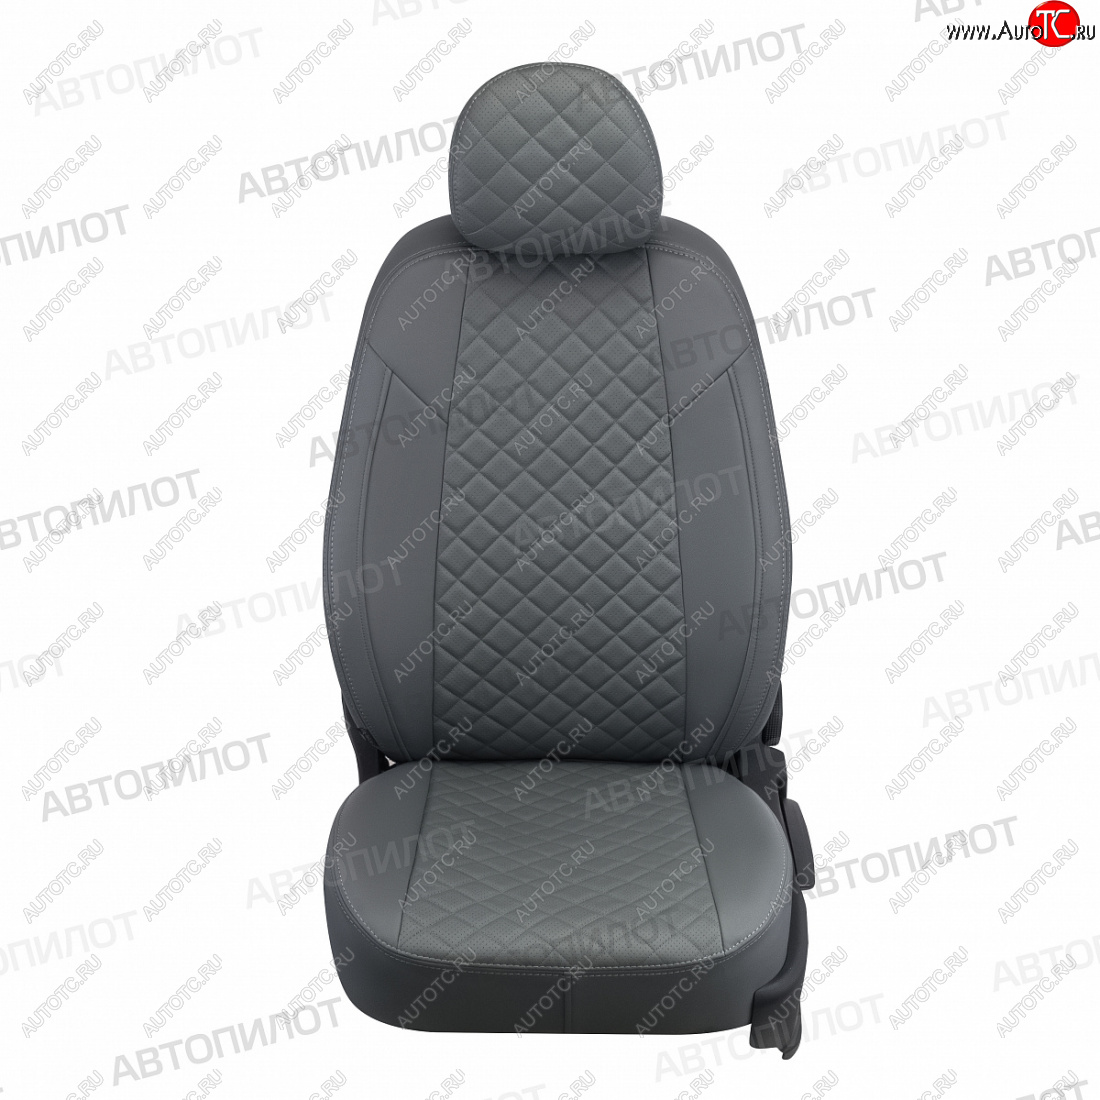 14 499 р. ехлы сидений (экокожа) Автопилот Ромб  Honda HR-V  GH3, GH4 (1998-2005) (серый)